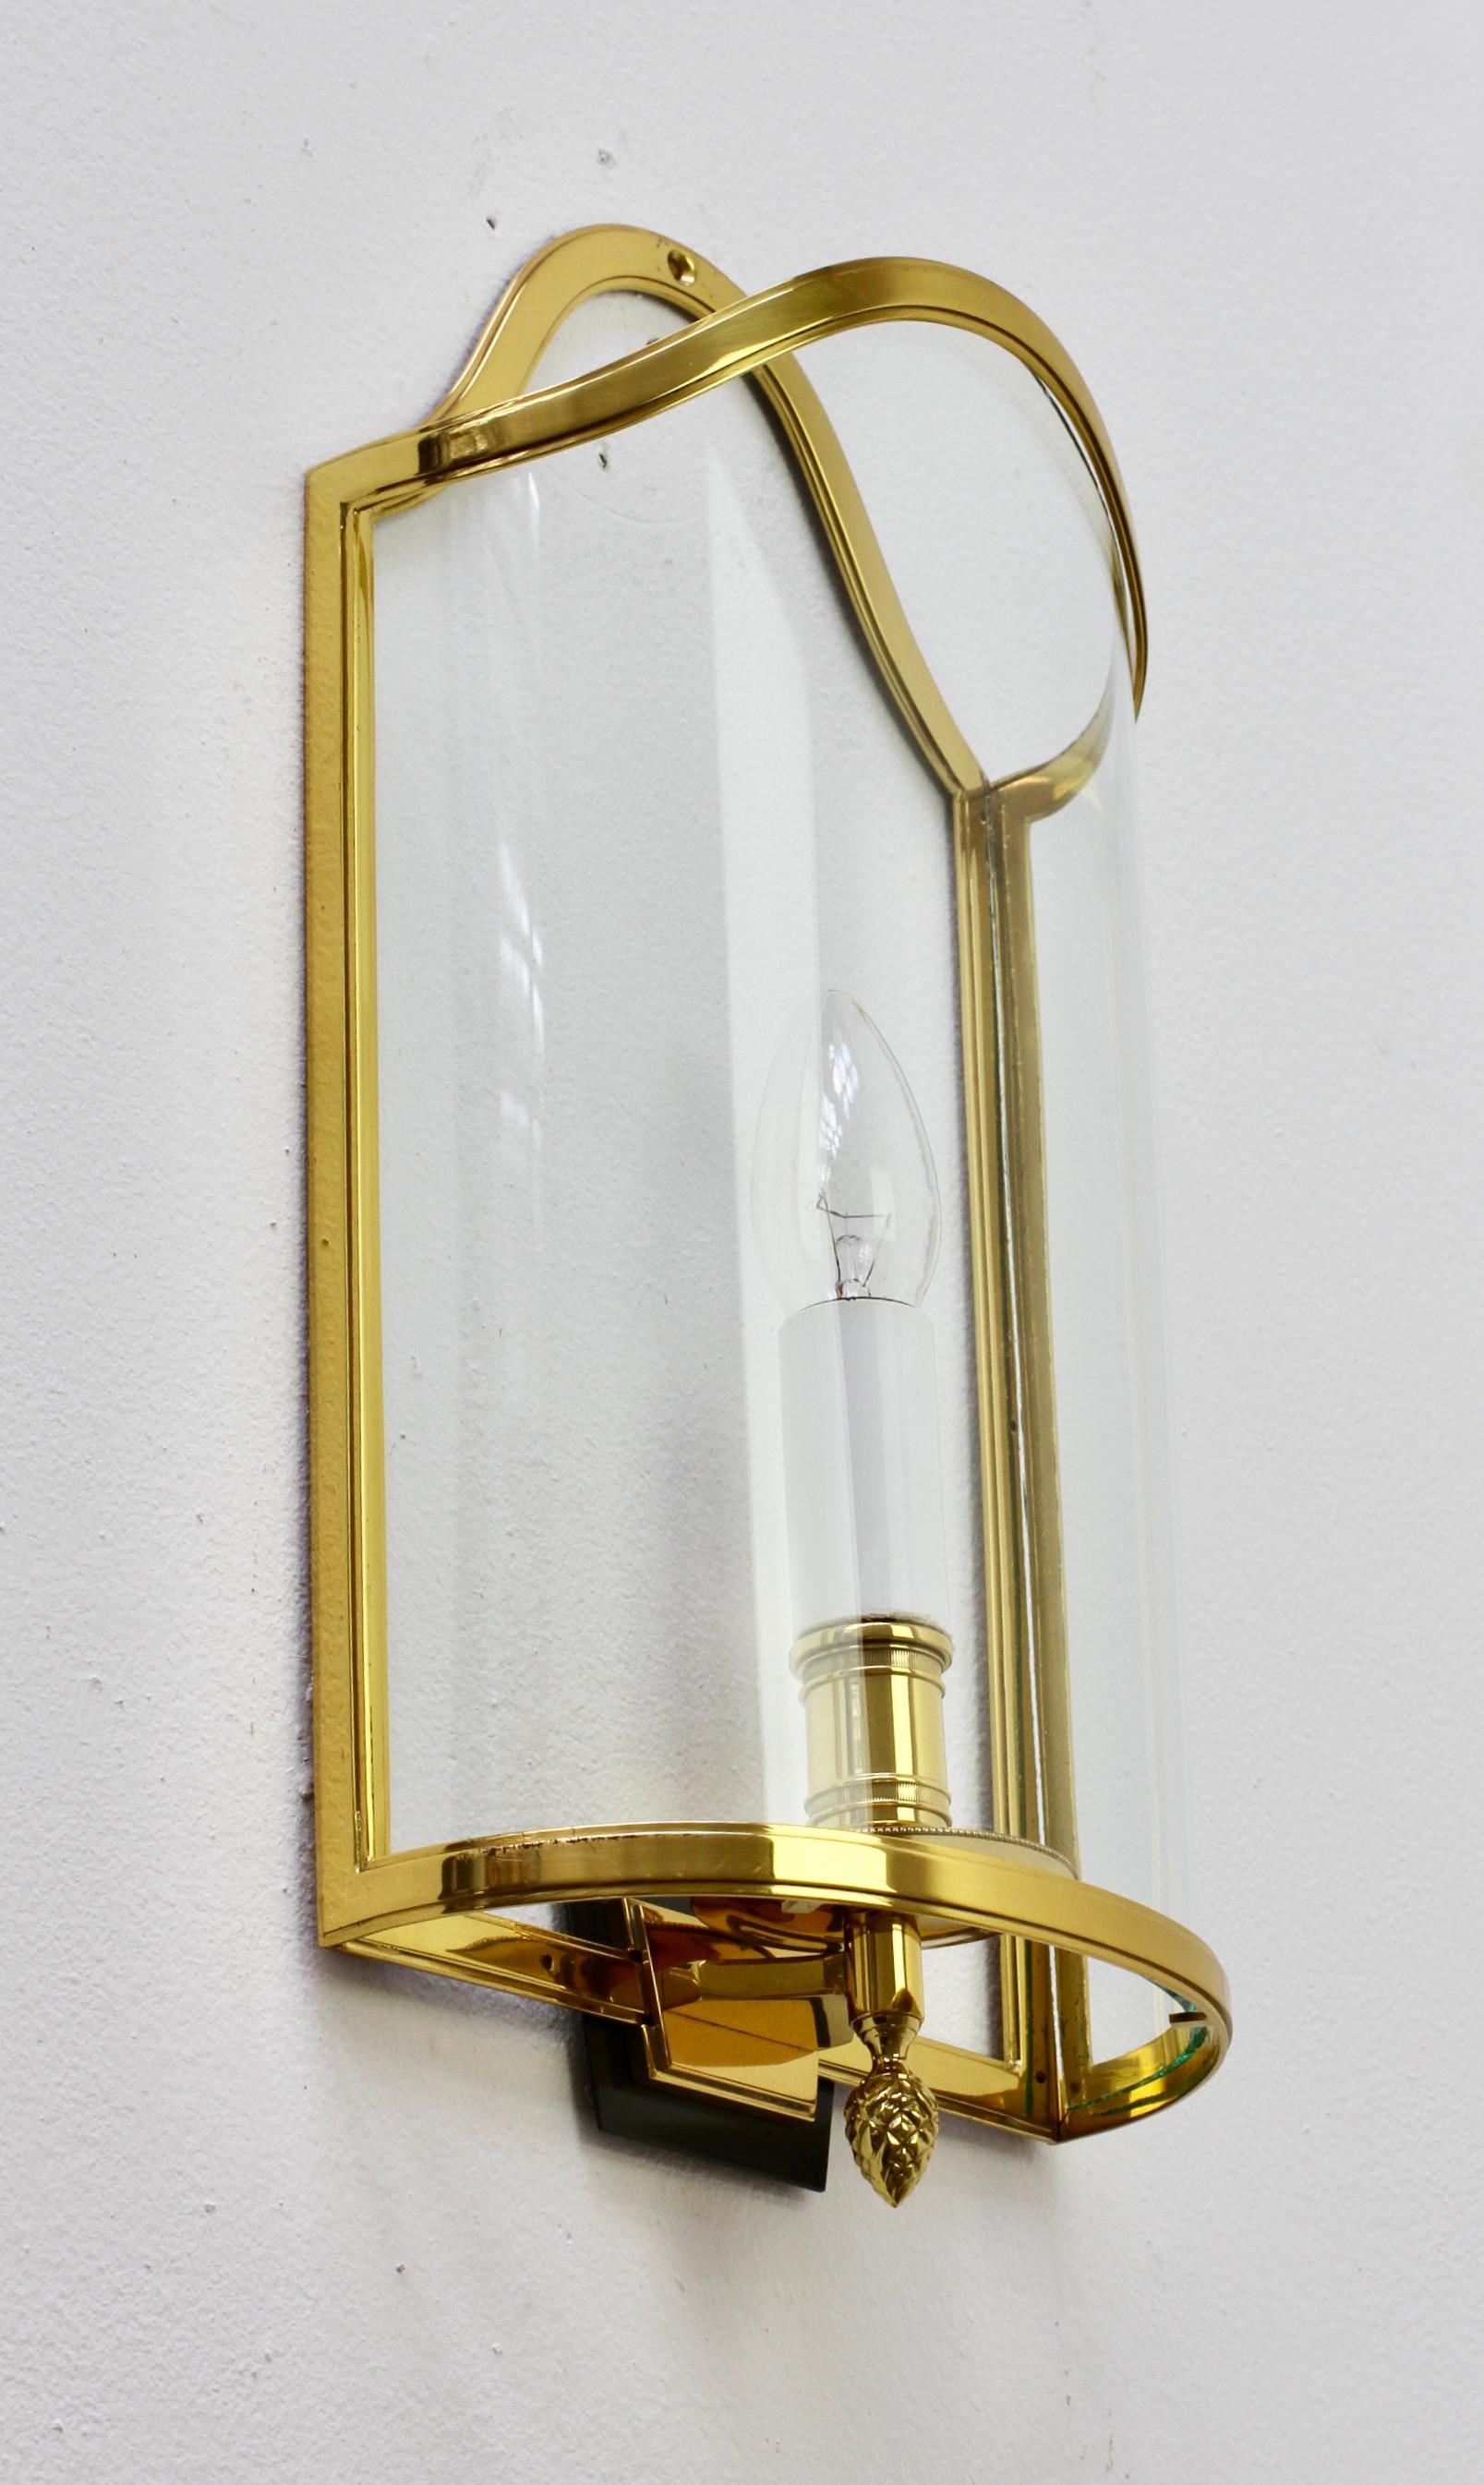 Lacquered Pair of Maison Jansen Style Polished Brass Sconces by Vereinigte Werkstätten For Sale